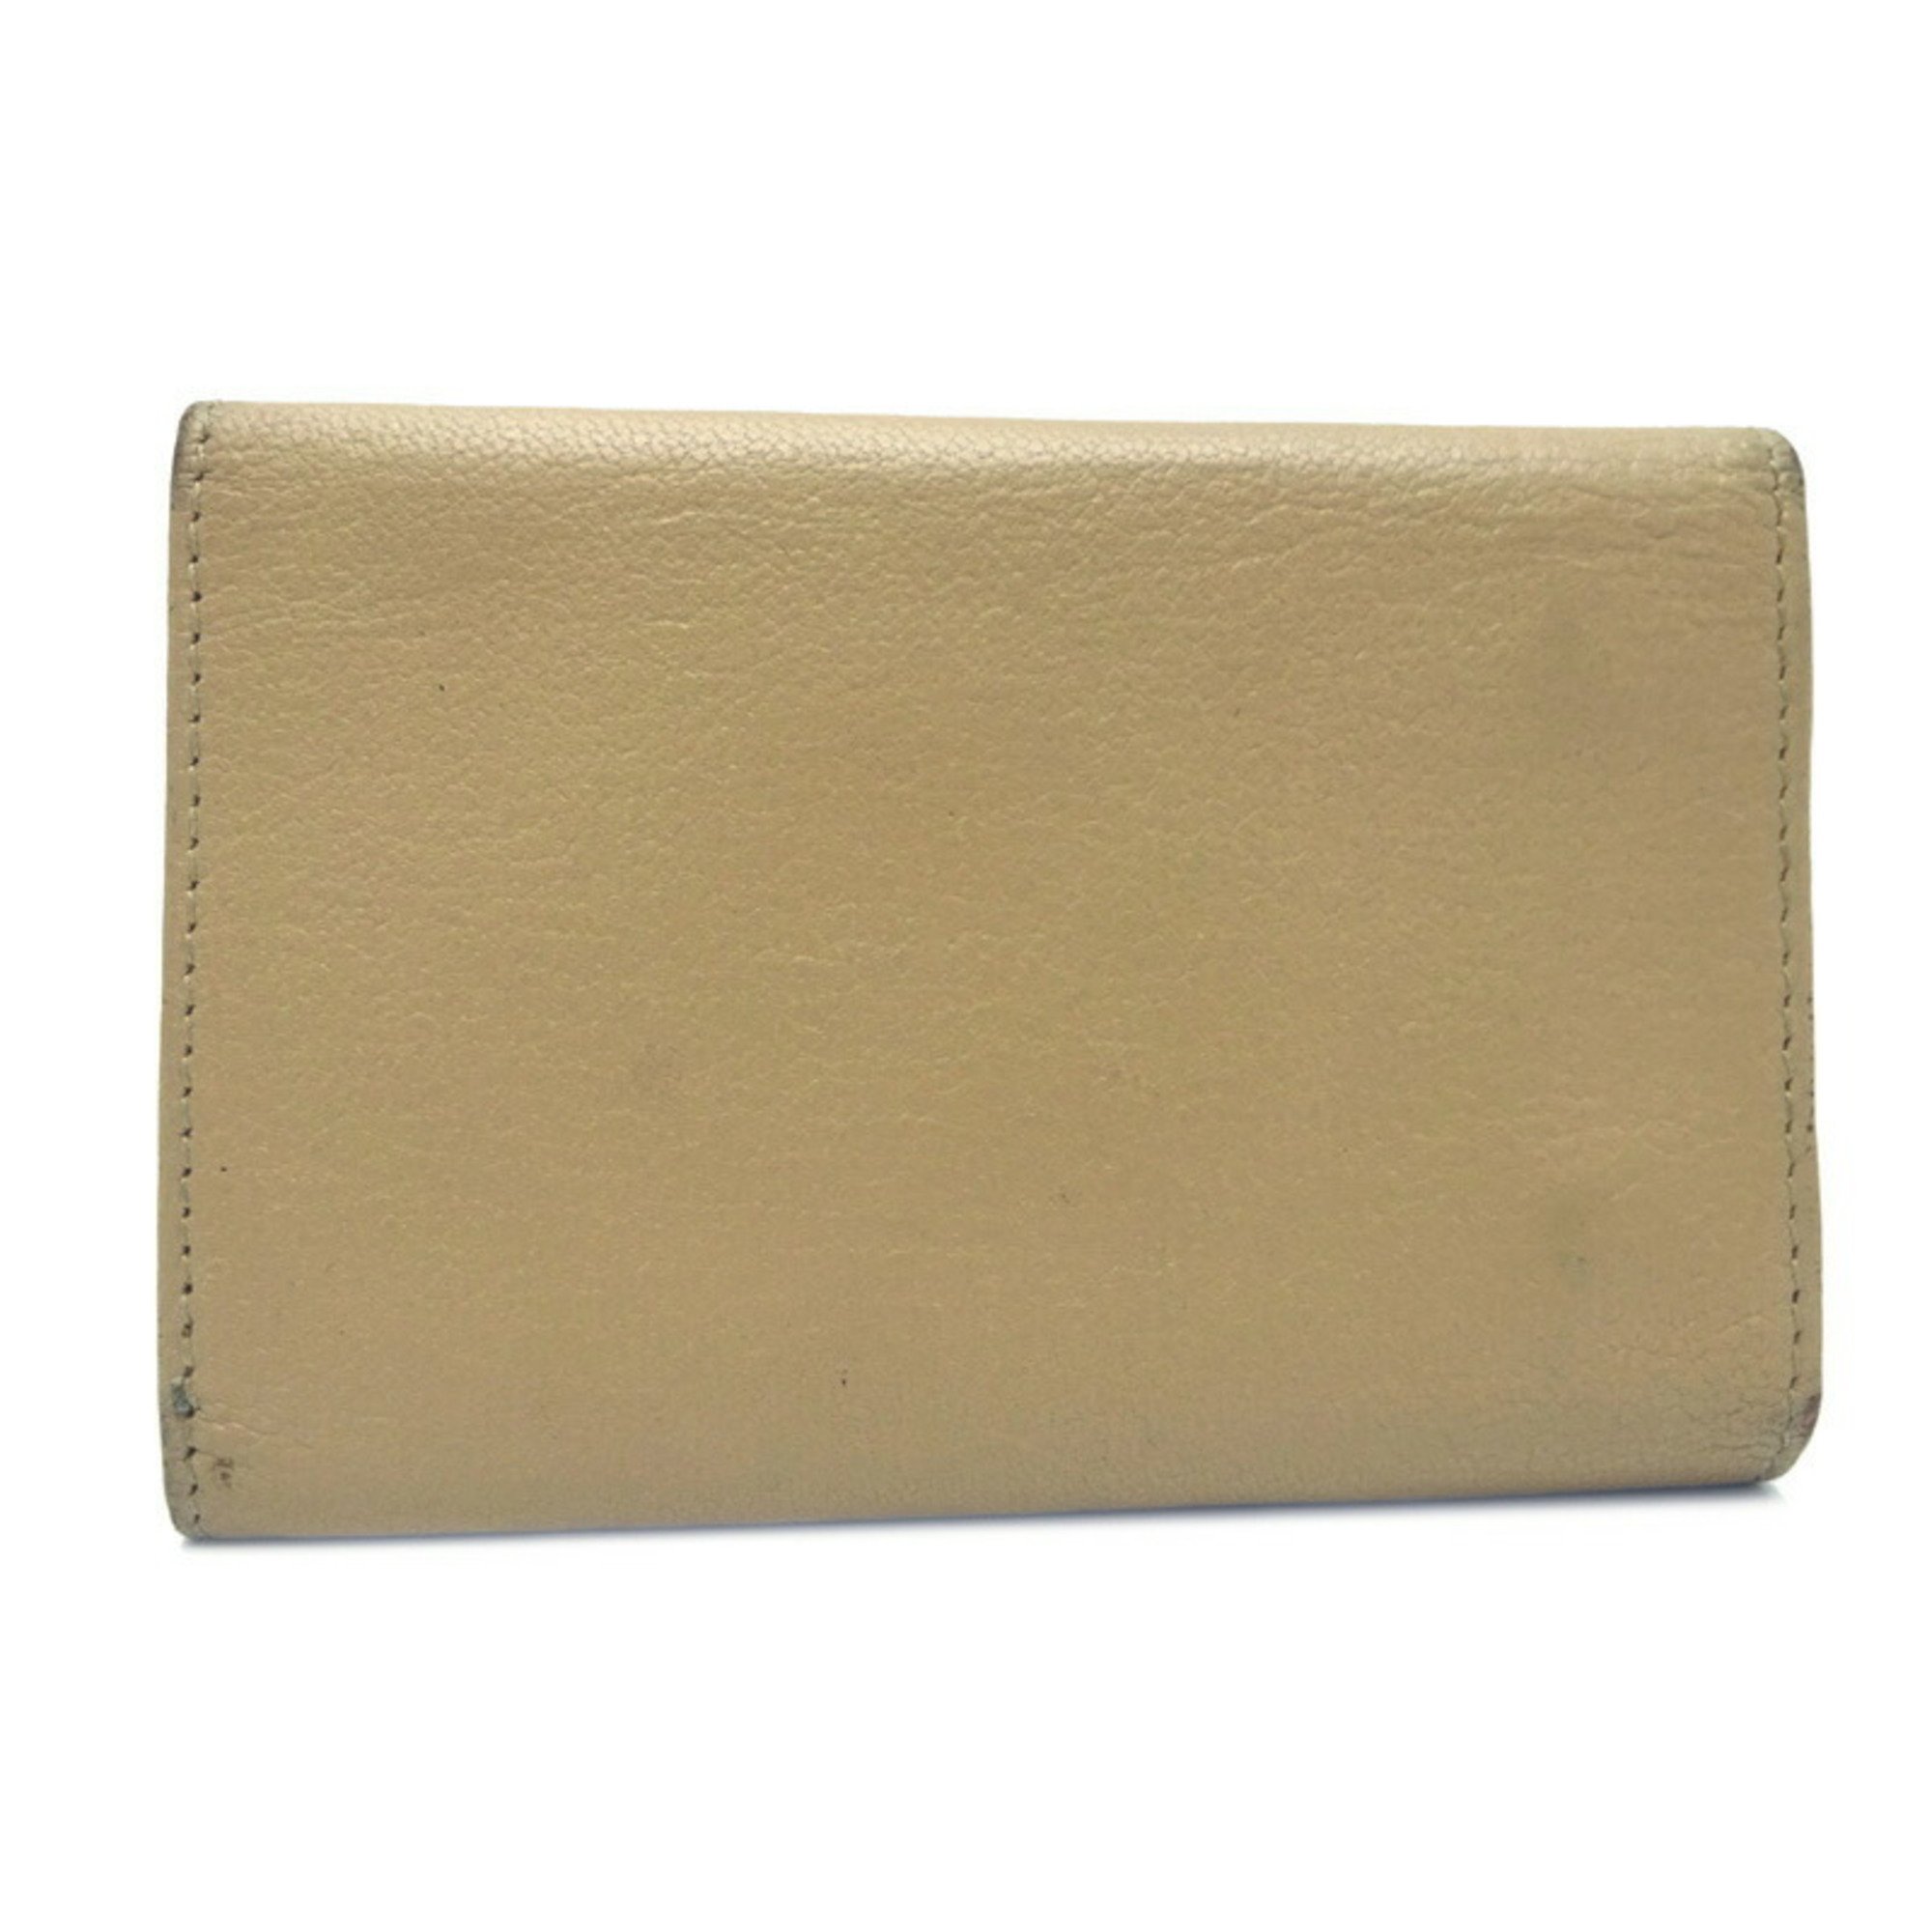 Chanel 6 key case ladies leather beige